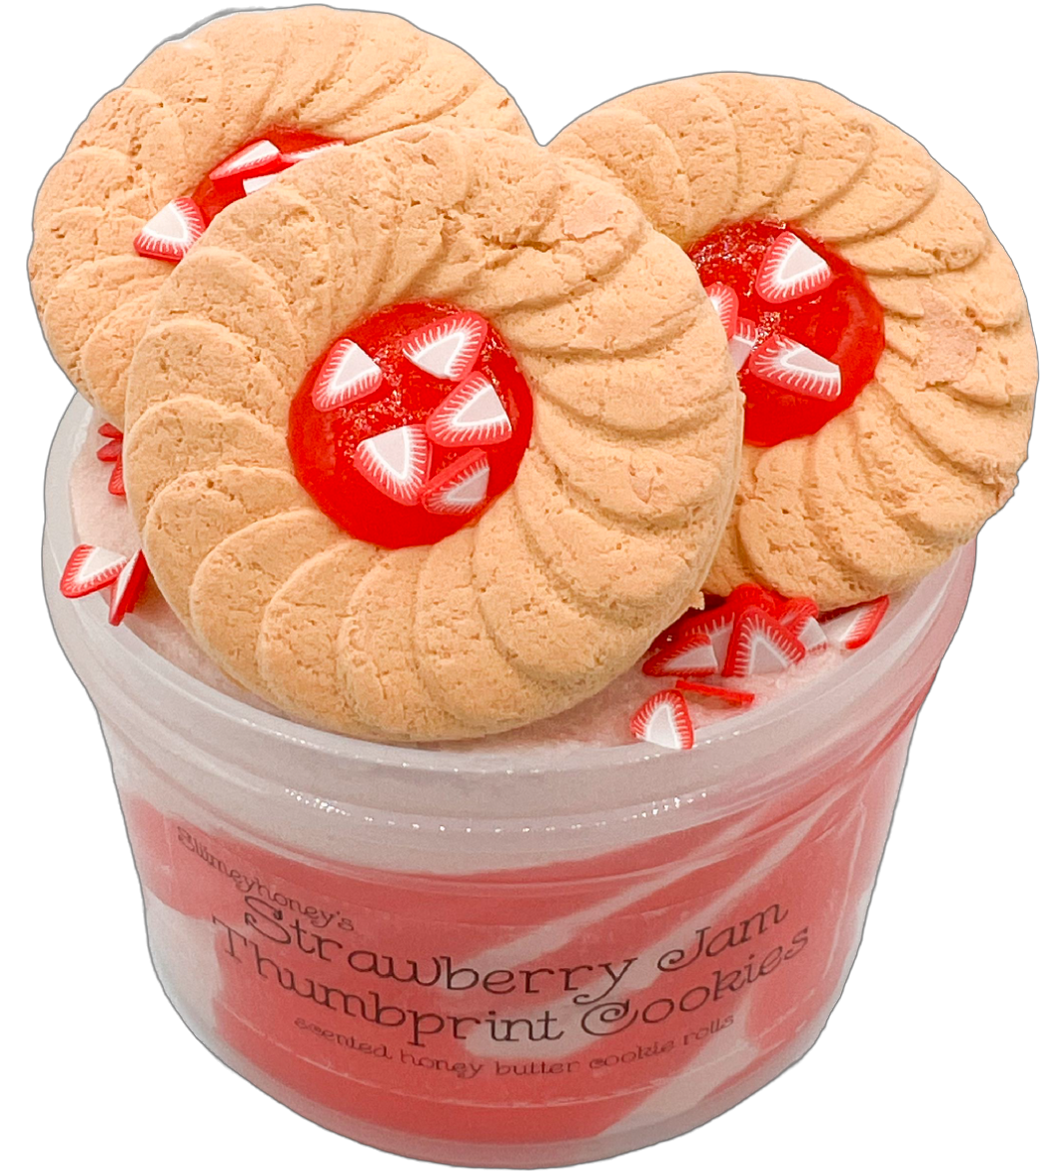 Strawberry Jam Thumbprint Cookies